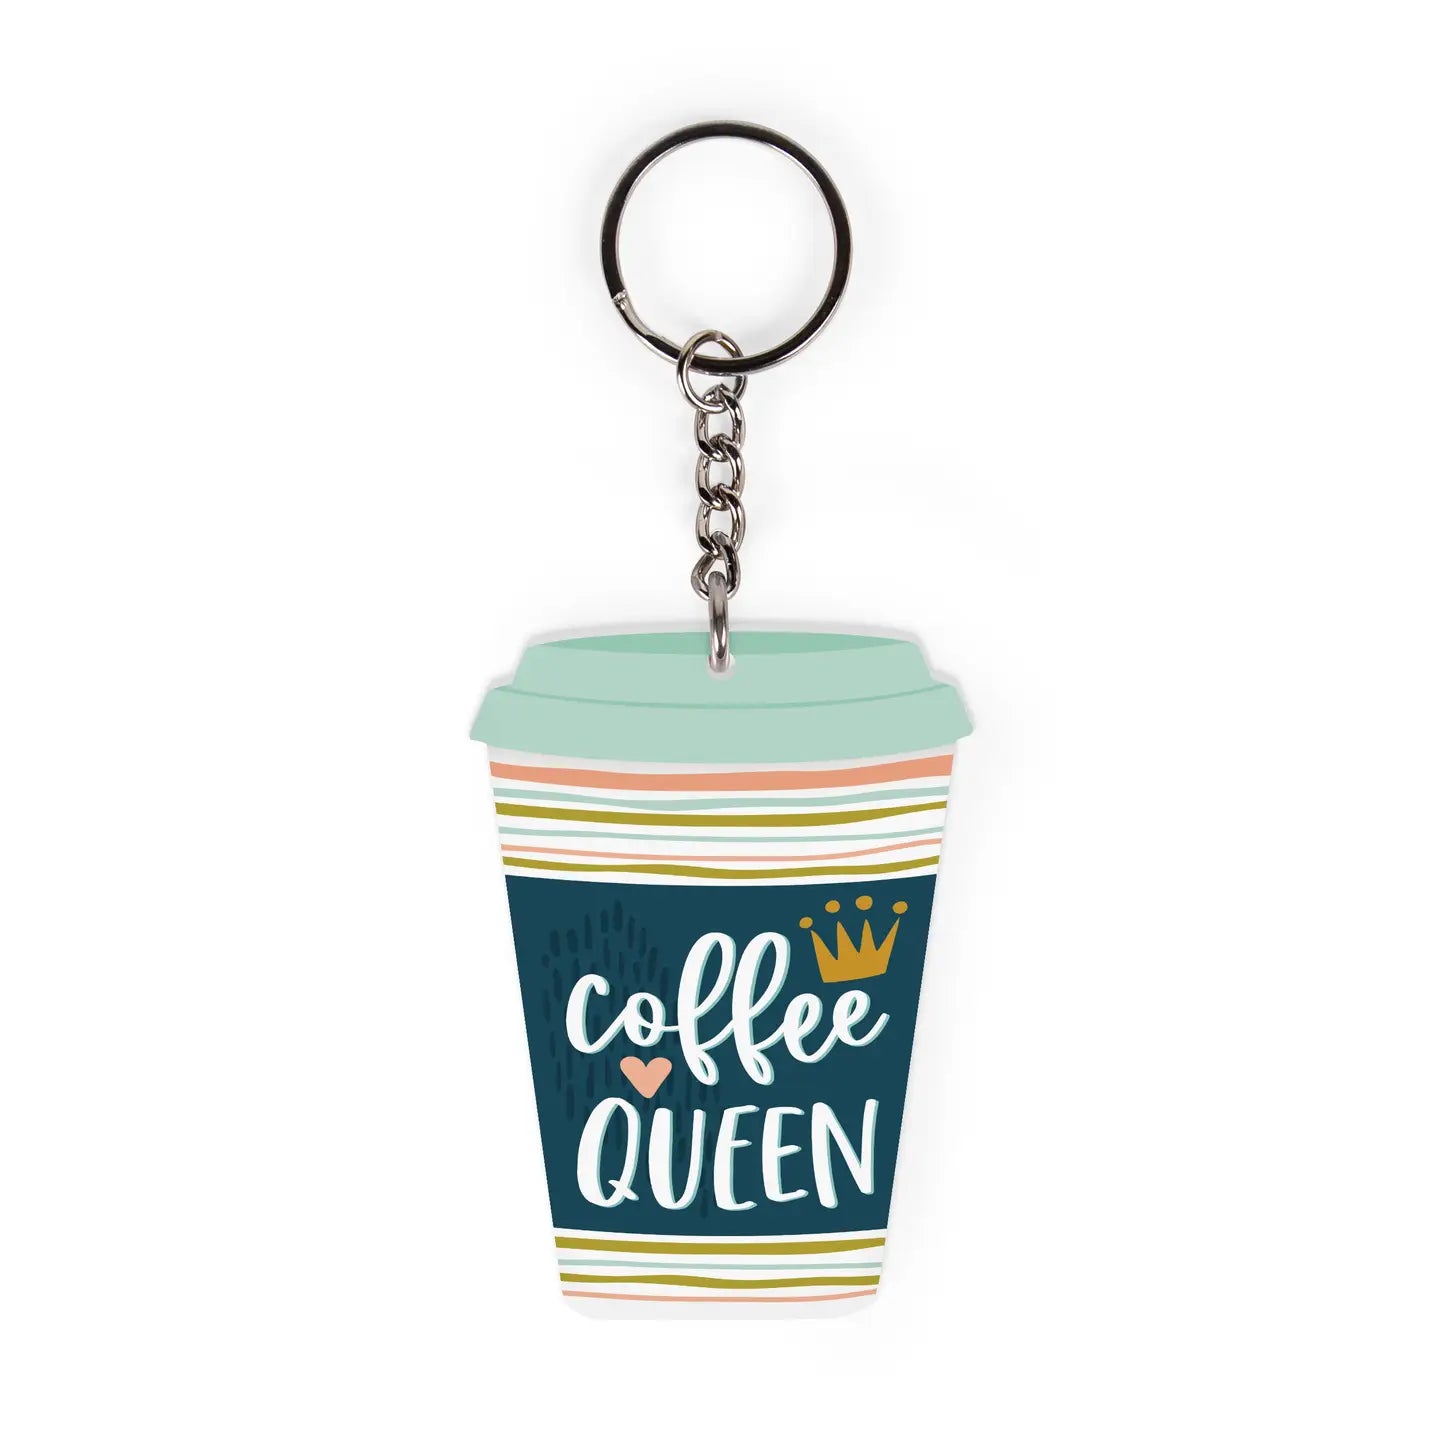 Coffee Queen Key Chain